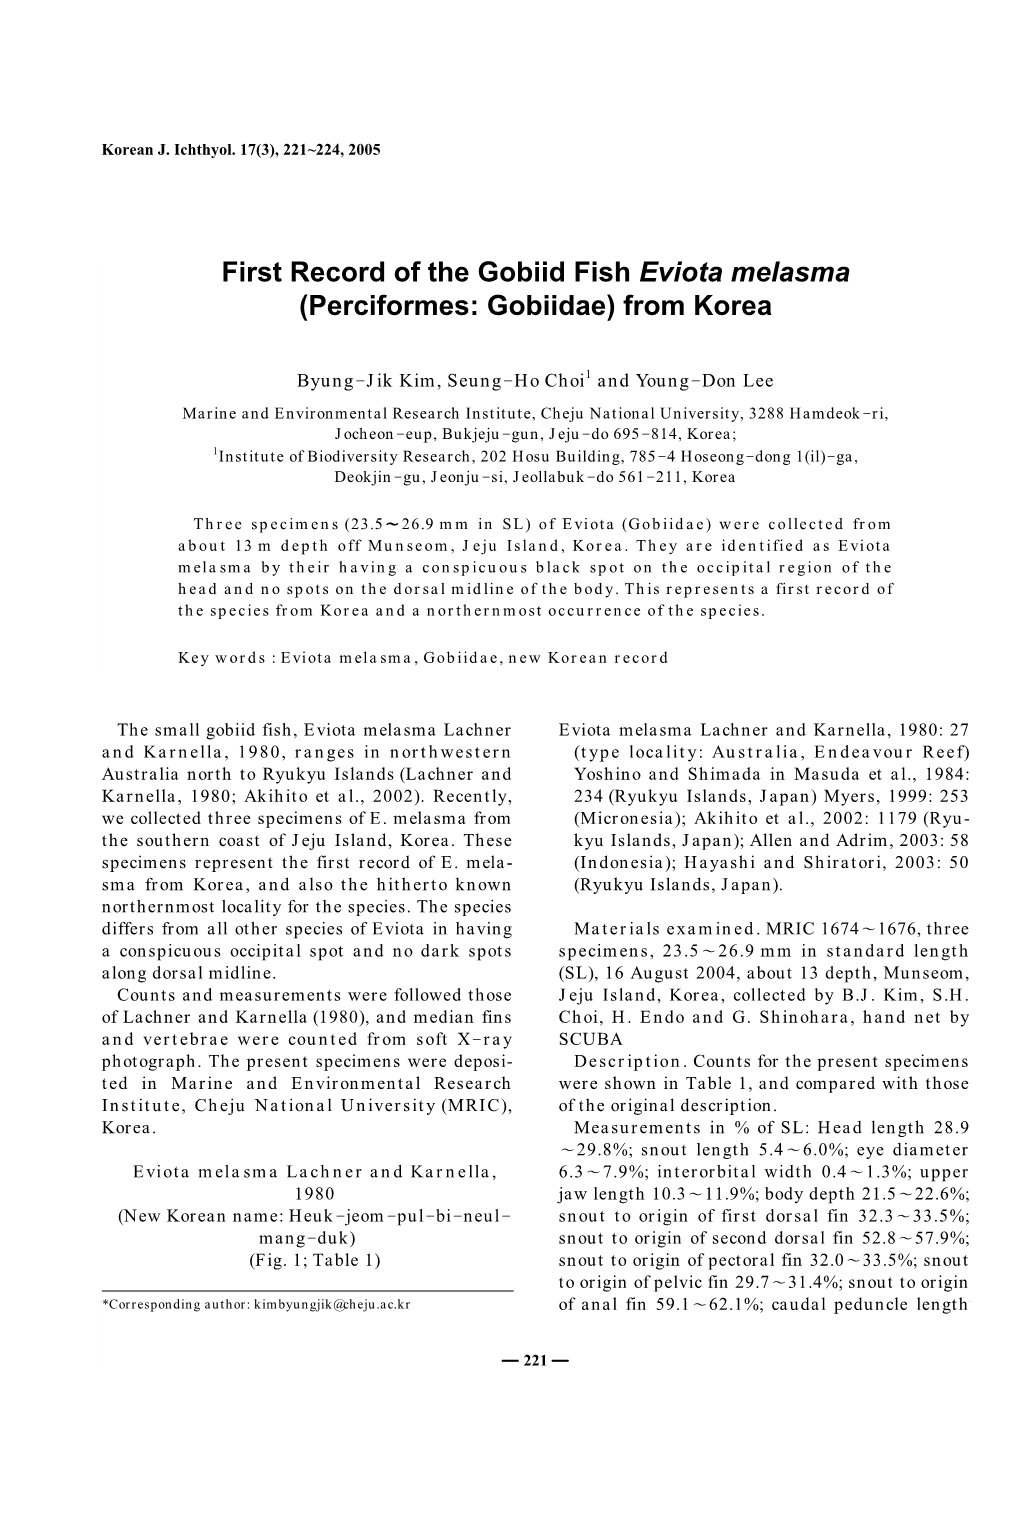 First Record of the Gobiid Fish Eviota Melasma (Perciformes: Gobiidae) from Korea